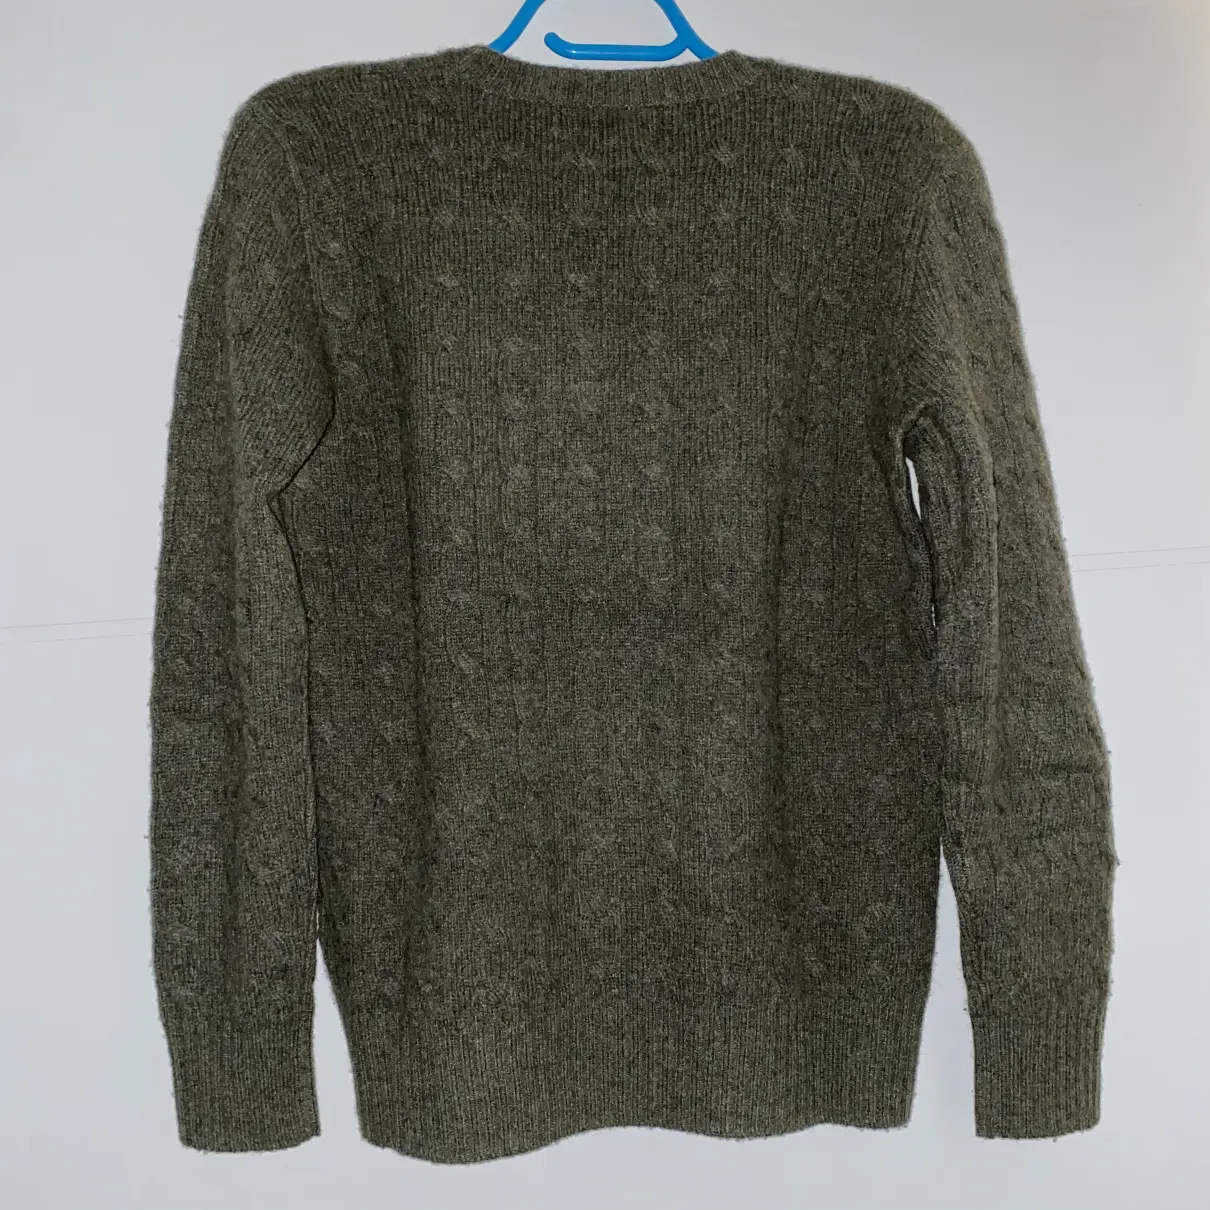 Buy Polo Ralph Lauren Cashmere sweater online